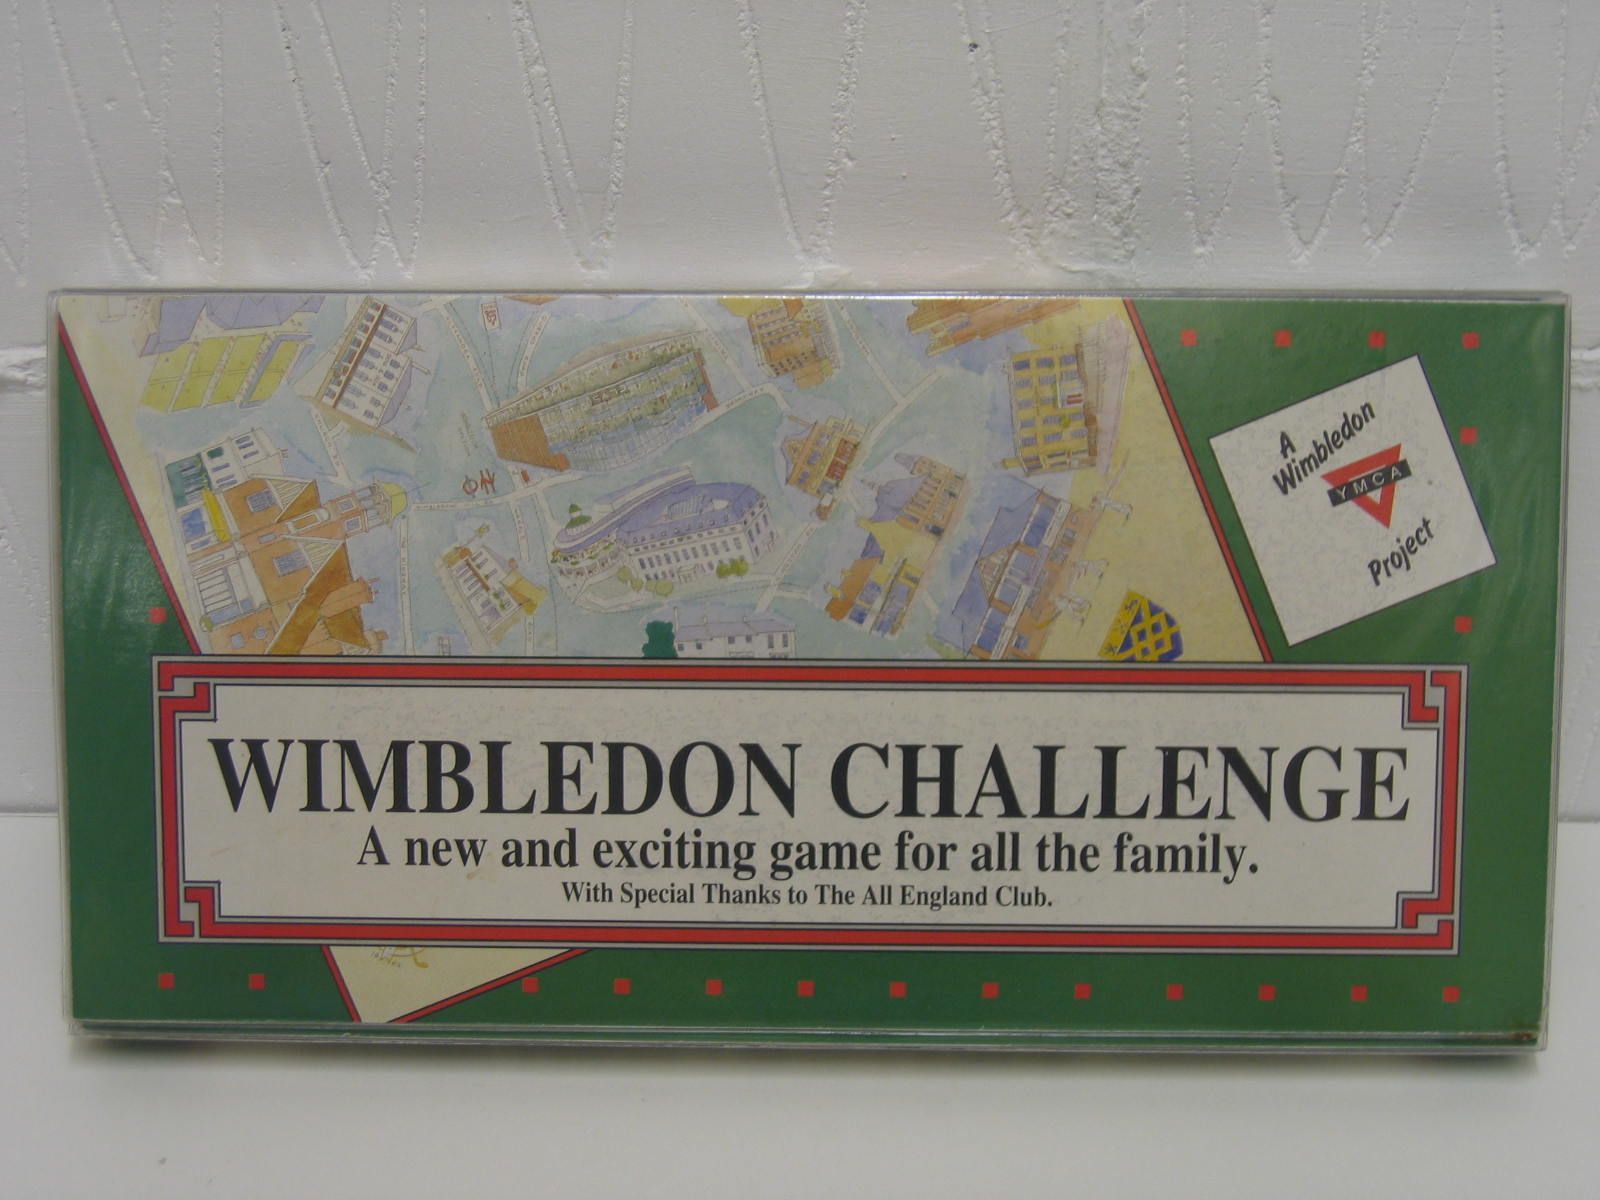 The Wimbledon Challenge